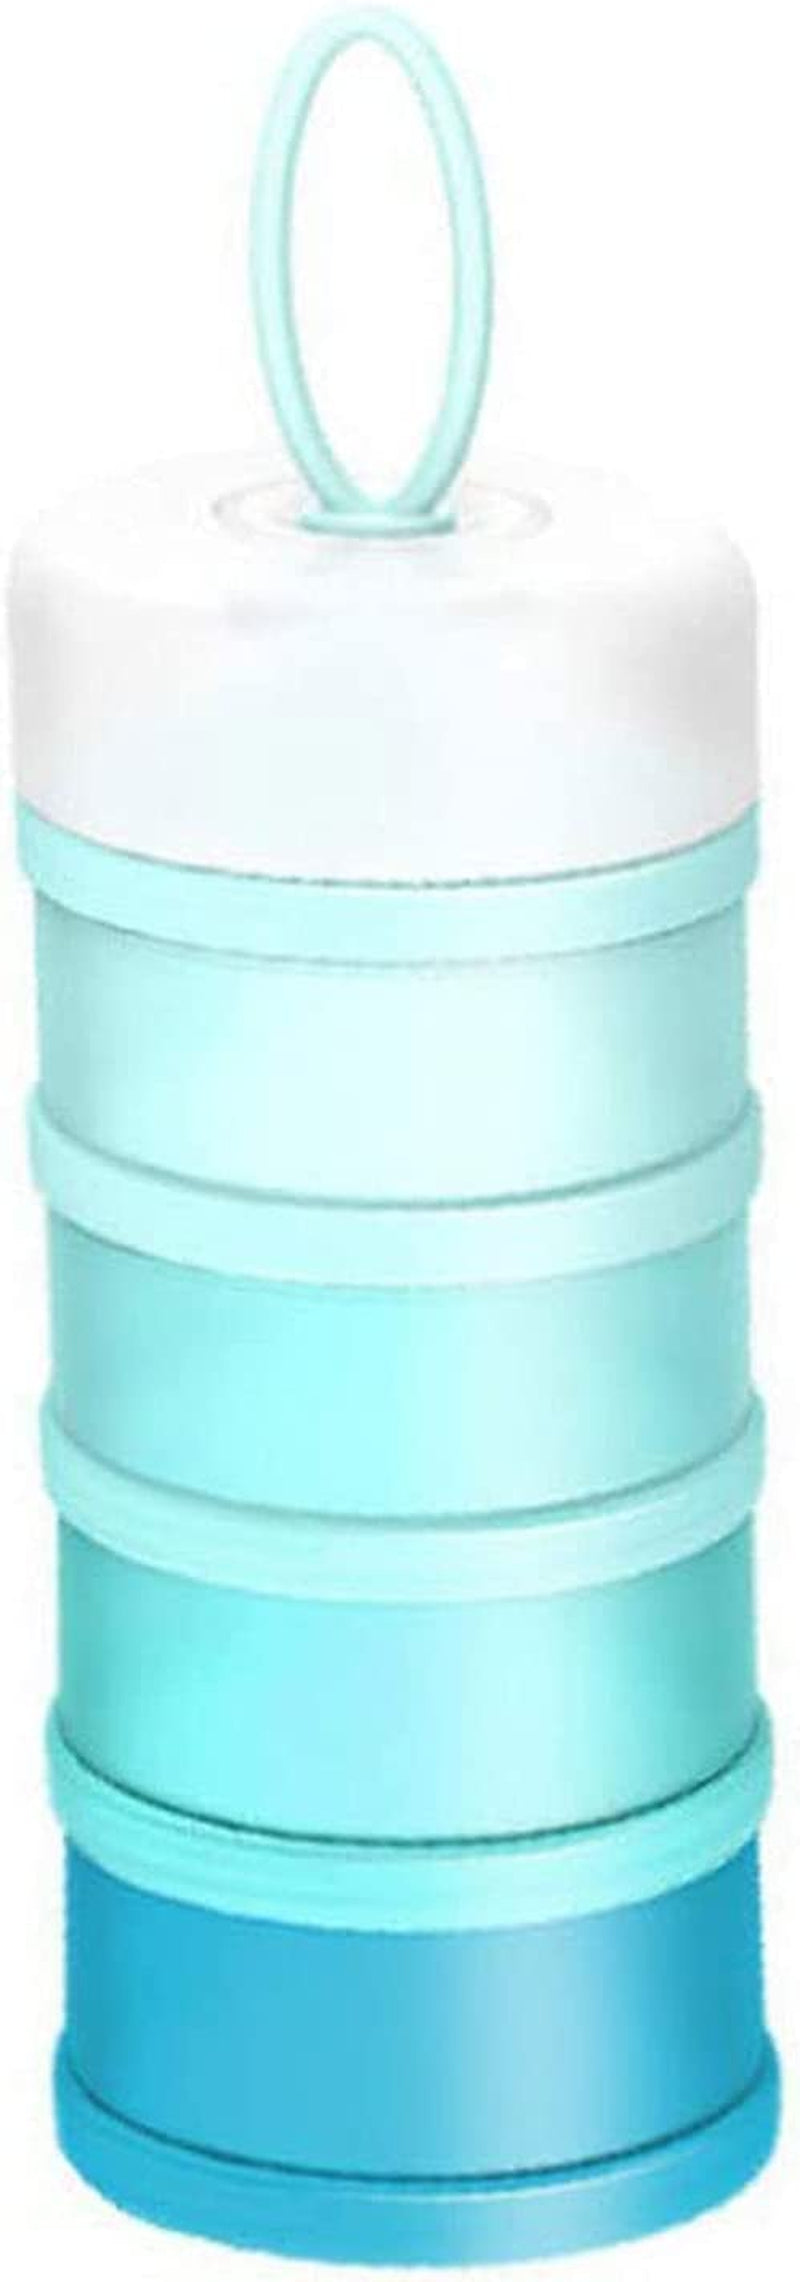 Formula Dispenser,Non-Spill Portable Stackable Baby Milk Powder Dispenser,Snack Storage Container,Bpa Free,4 Feeds (Blue)